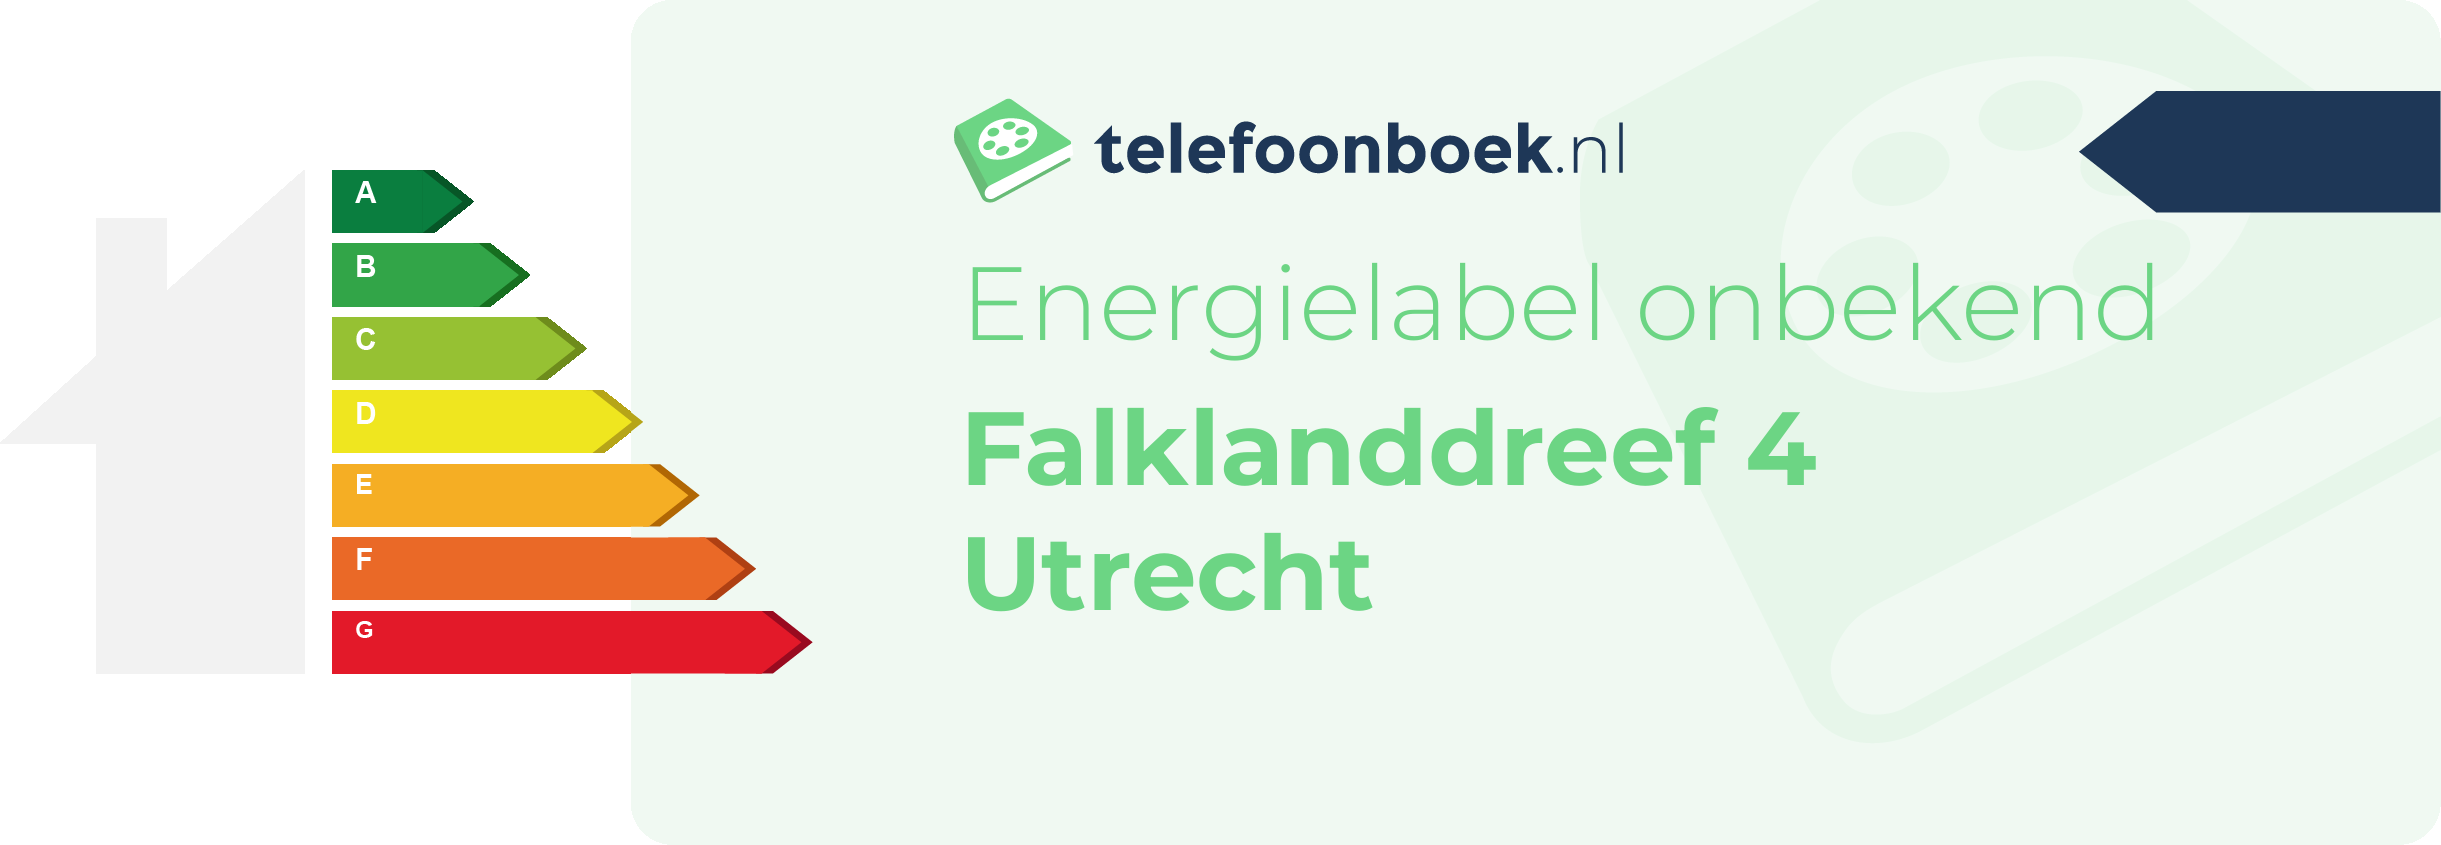 Energielabel Falklanddreef 4 Utrecht